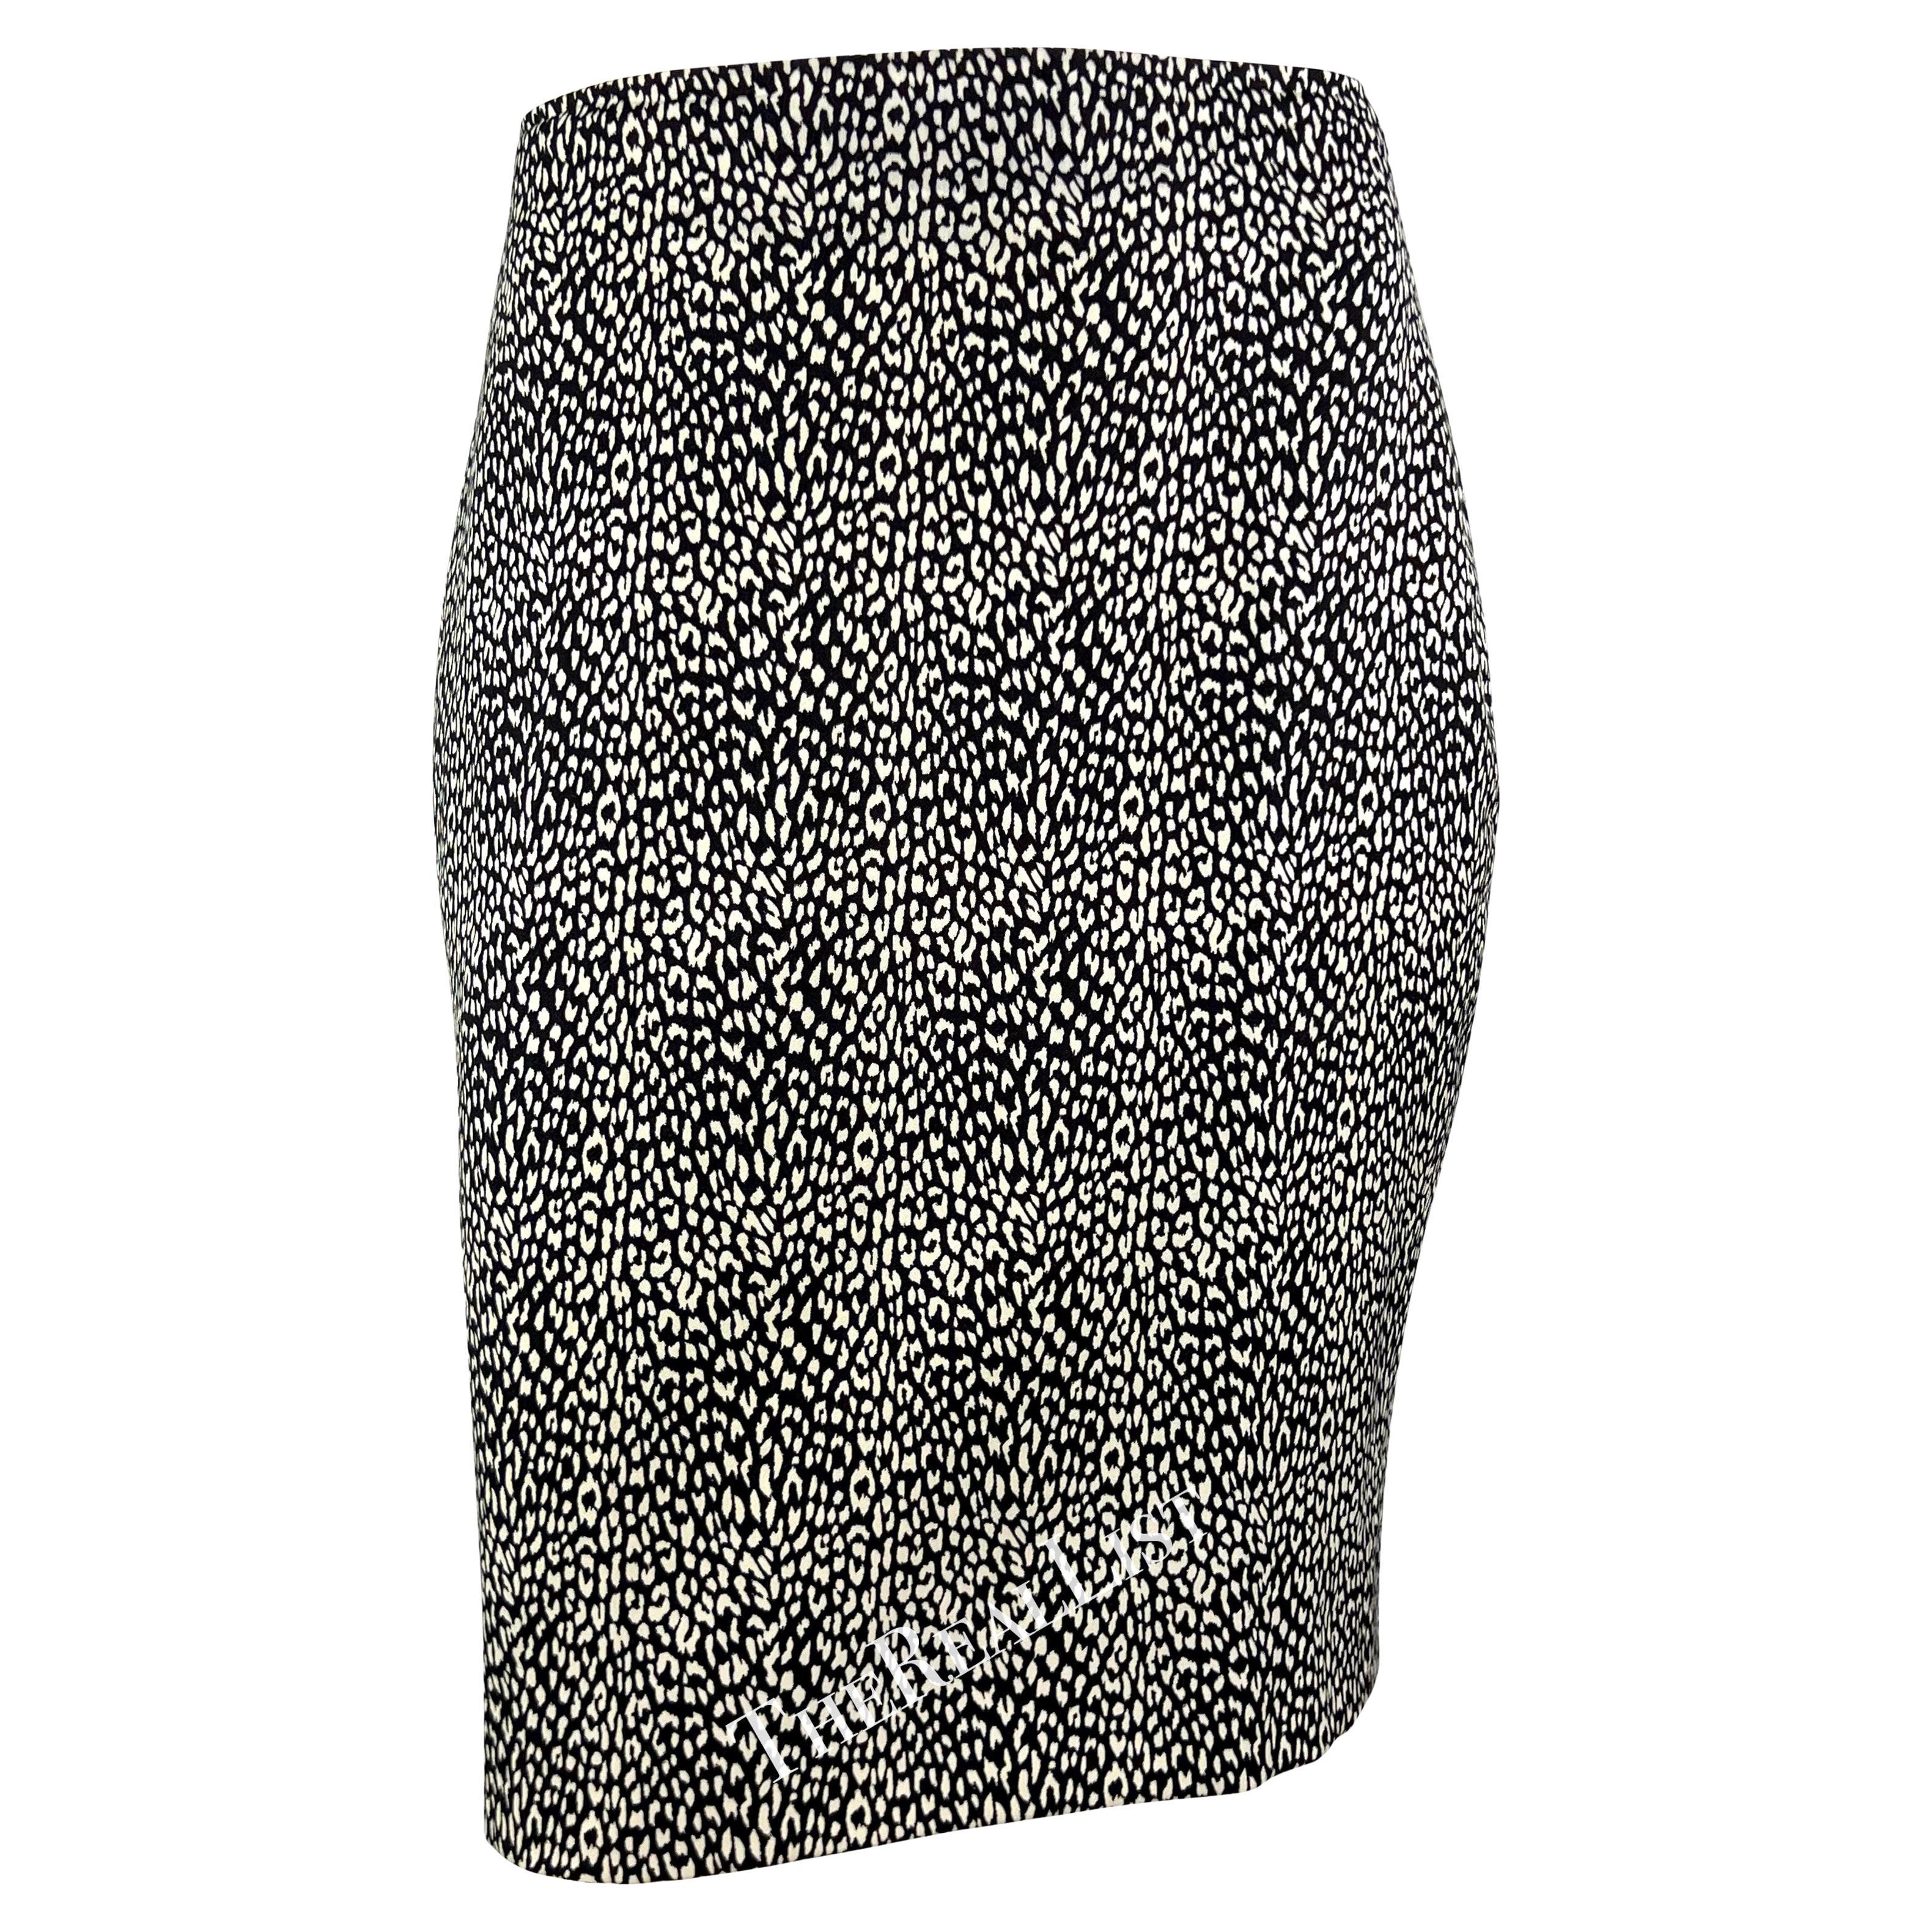 F/W 1996 Gianni Versace Couture Black White Cheetah Print Pencil Skirt  For Sale